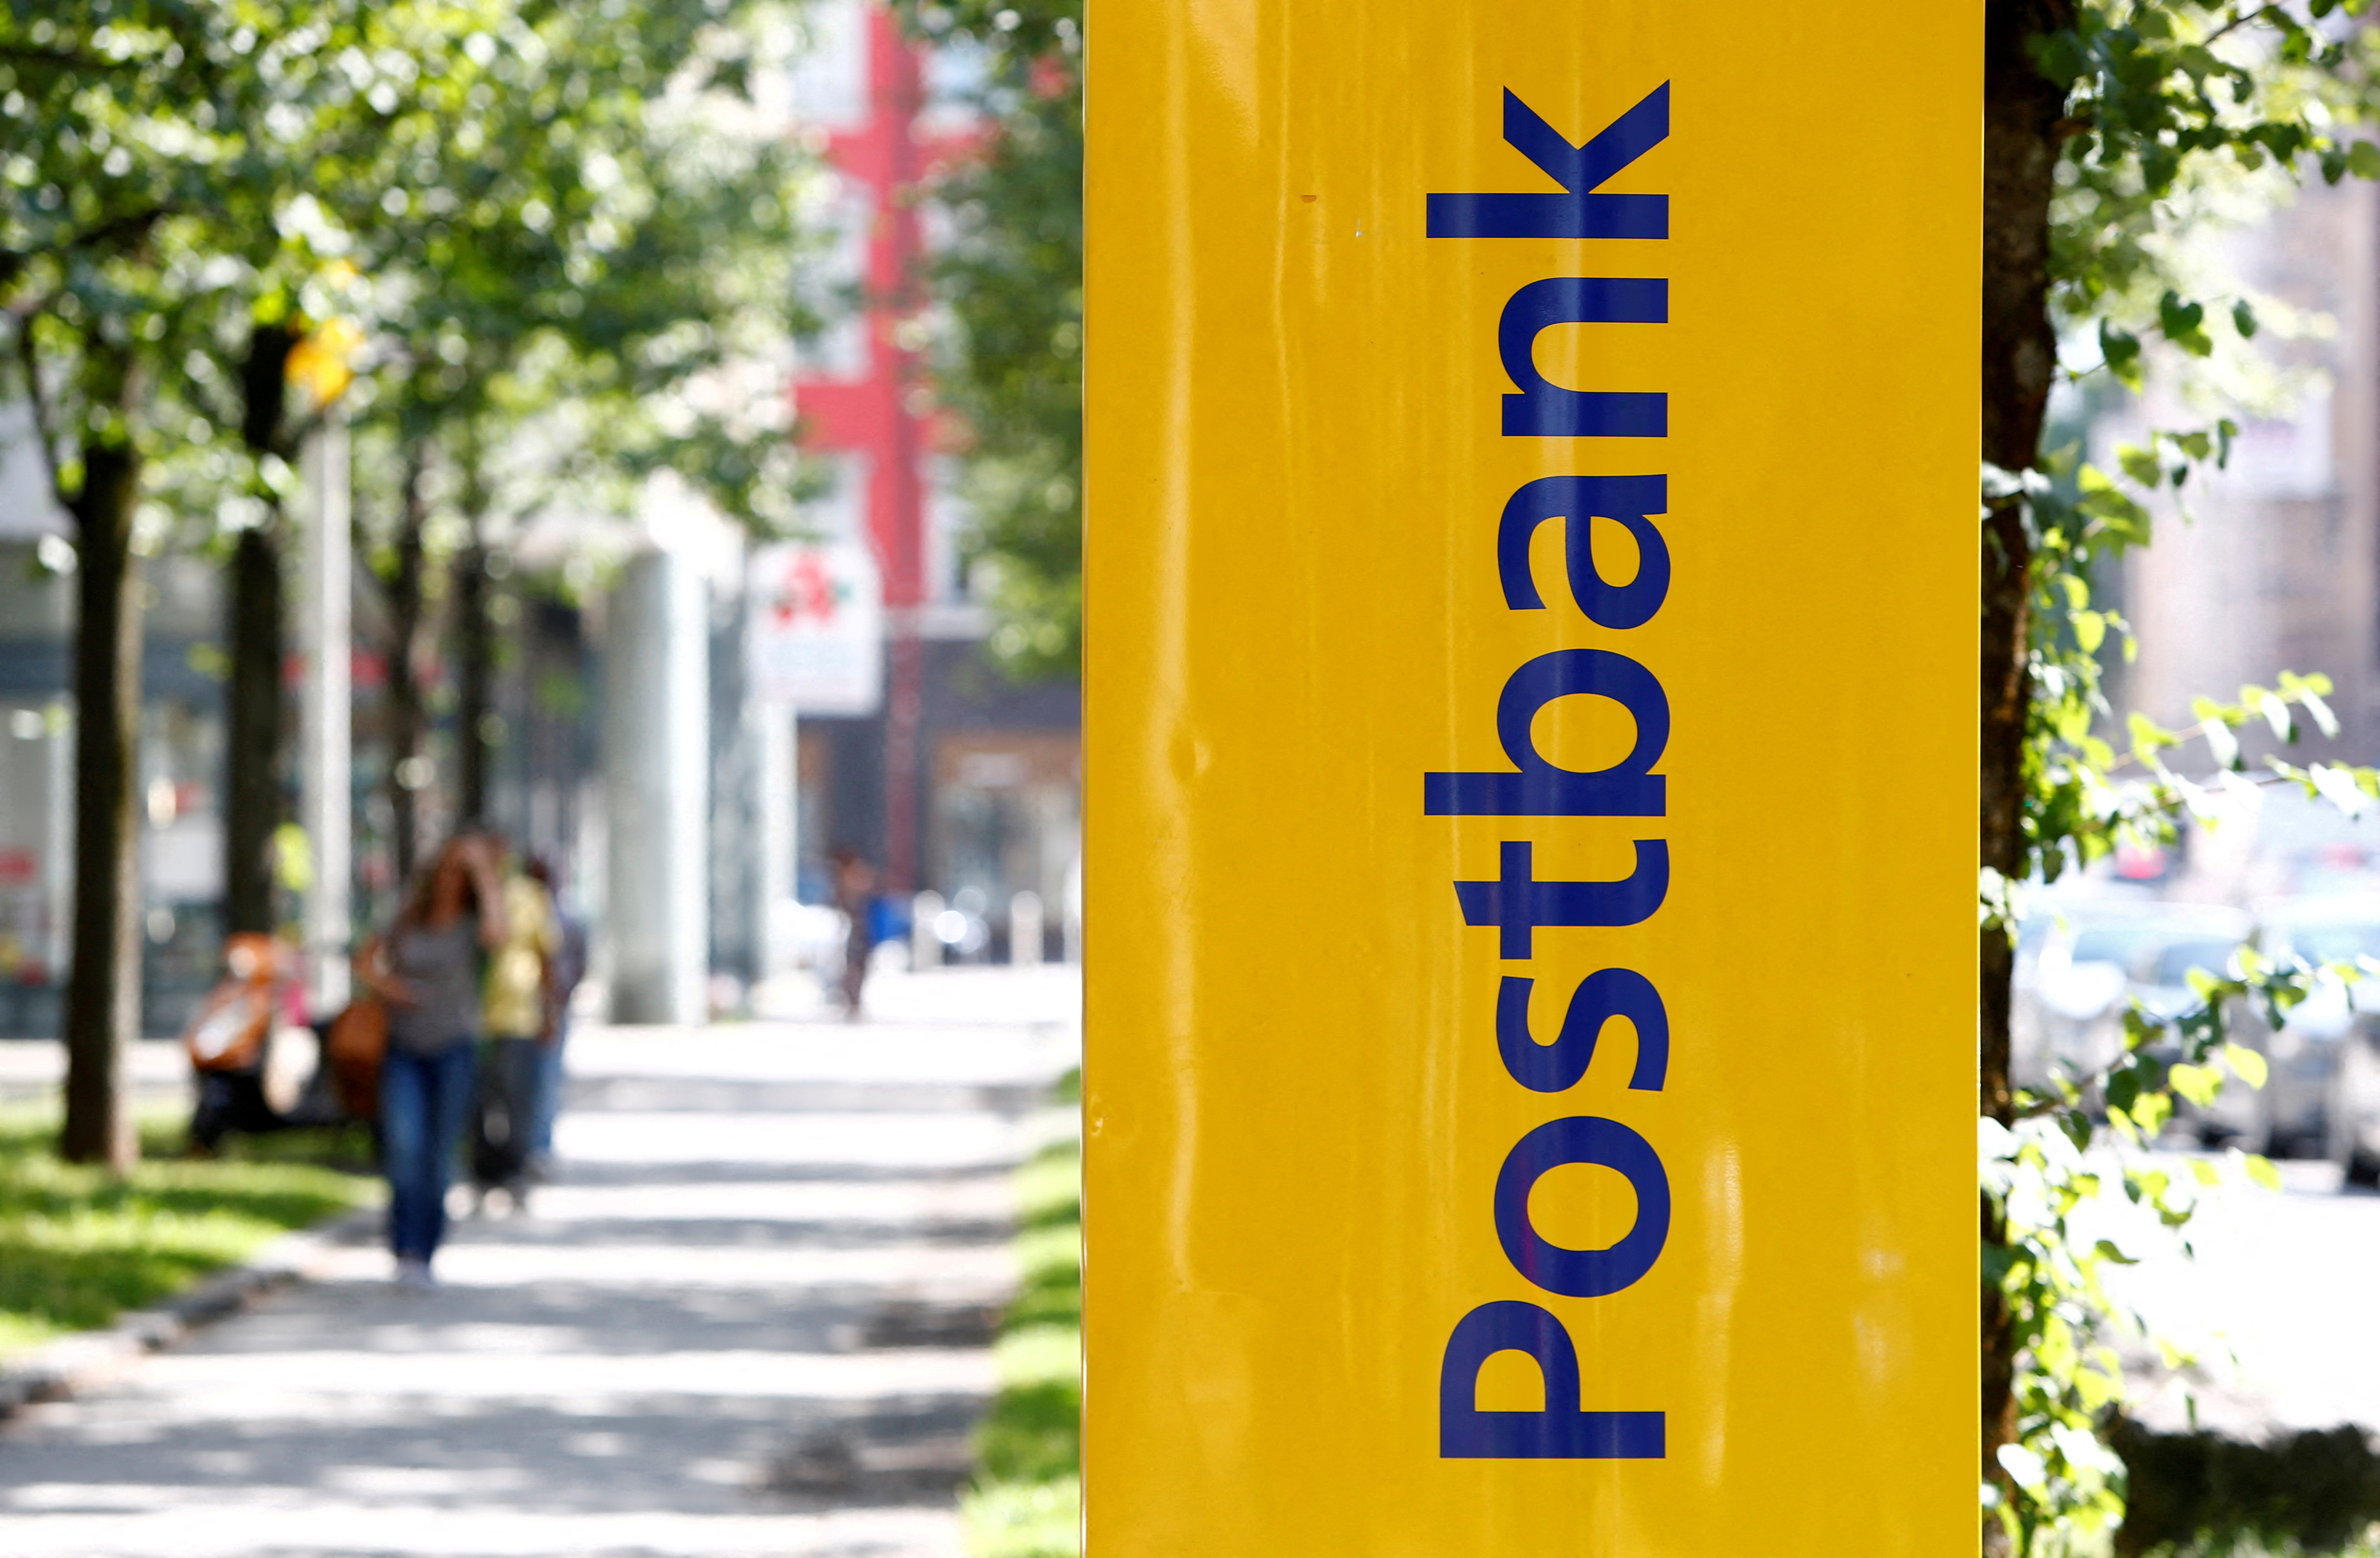 A Postbank sign is seen in Munich